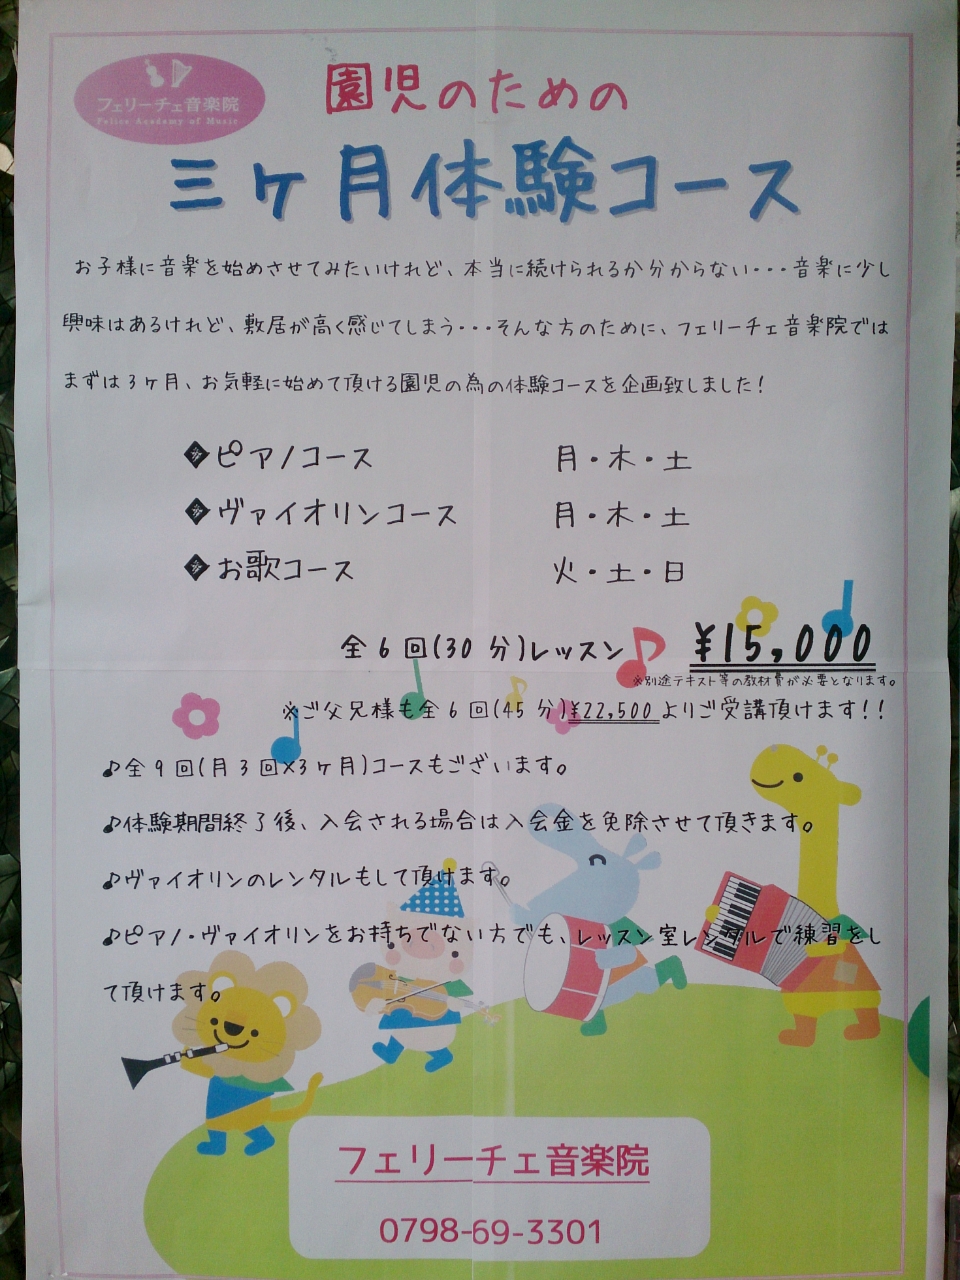 http://felice-ongakuin.com/news/2014-06-02-17-26-05_deco.jpg